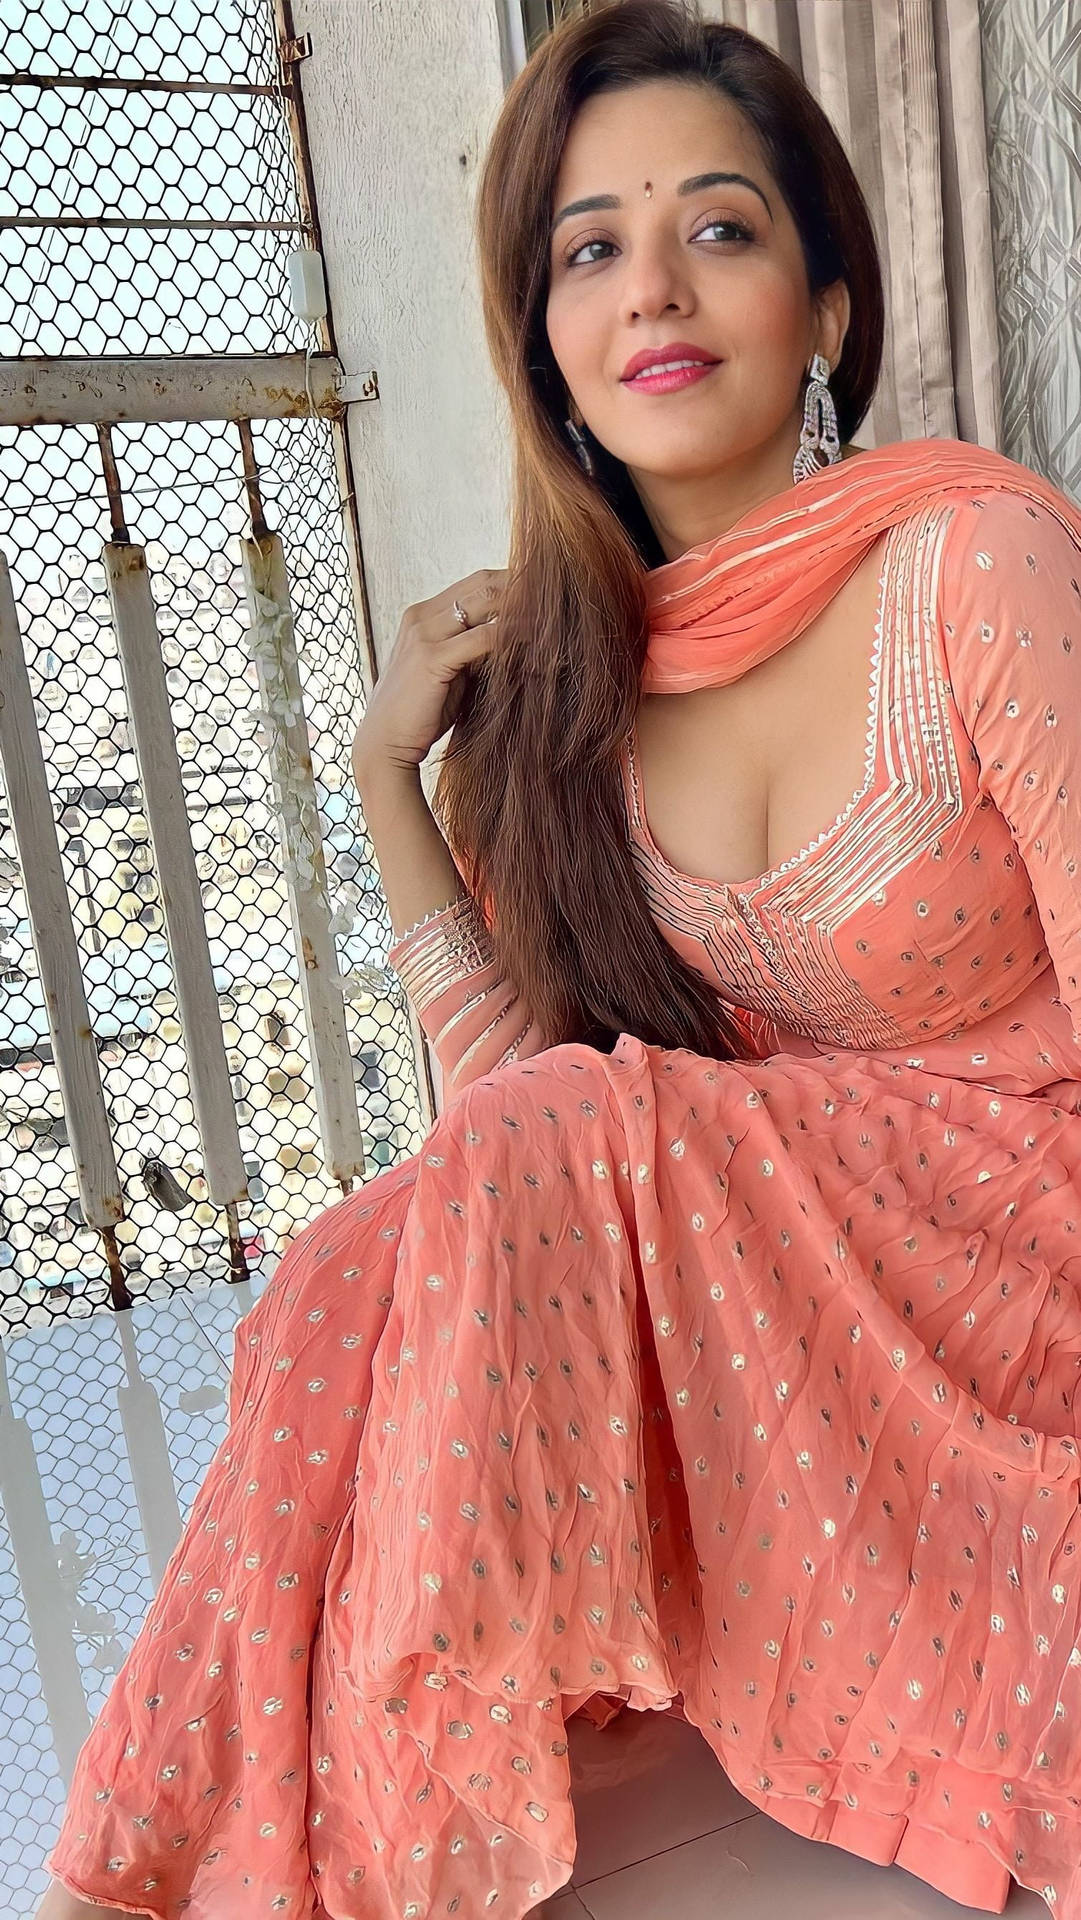 Download Bhojpuri Actress In An Embellished Dress Wallpaper 